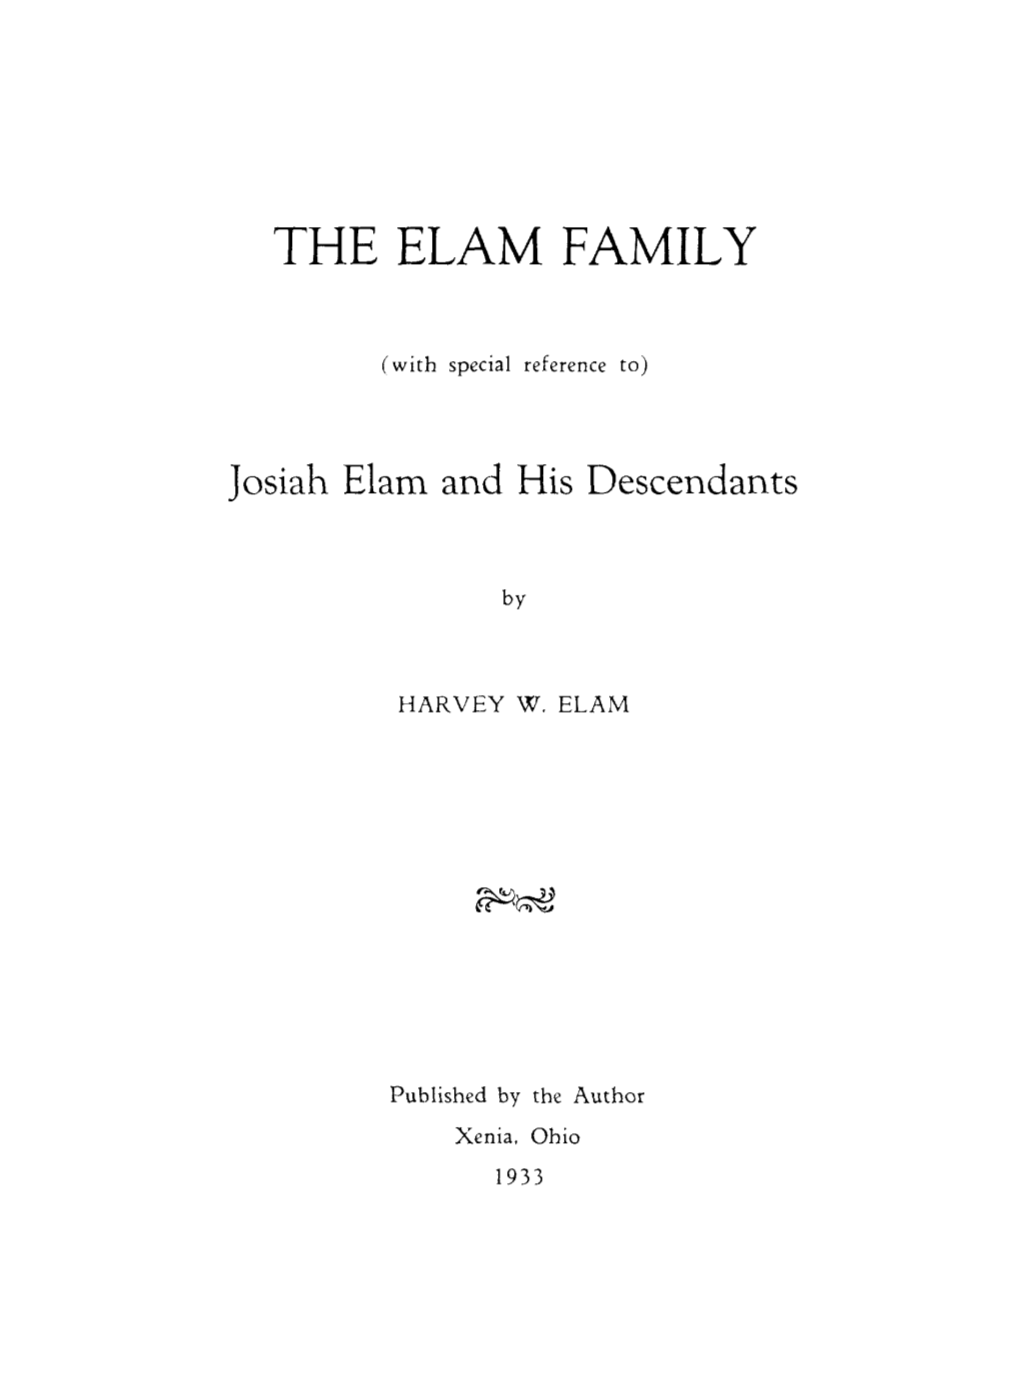 The Elam Family